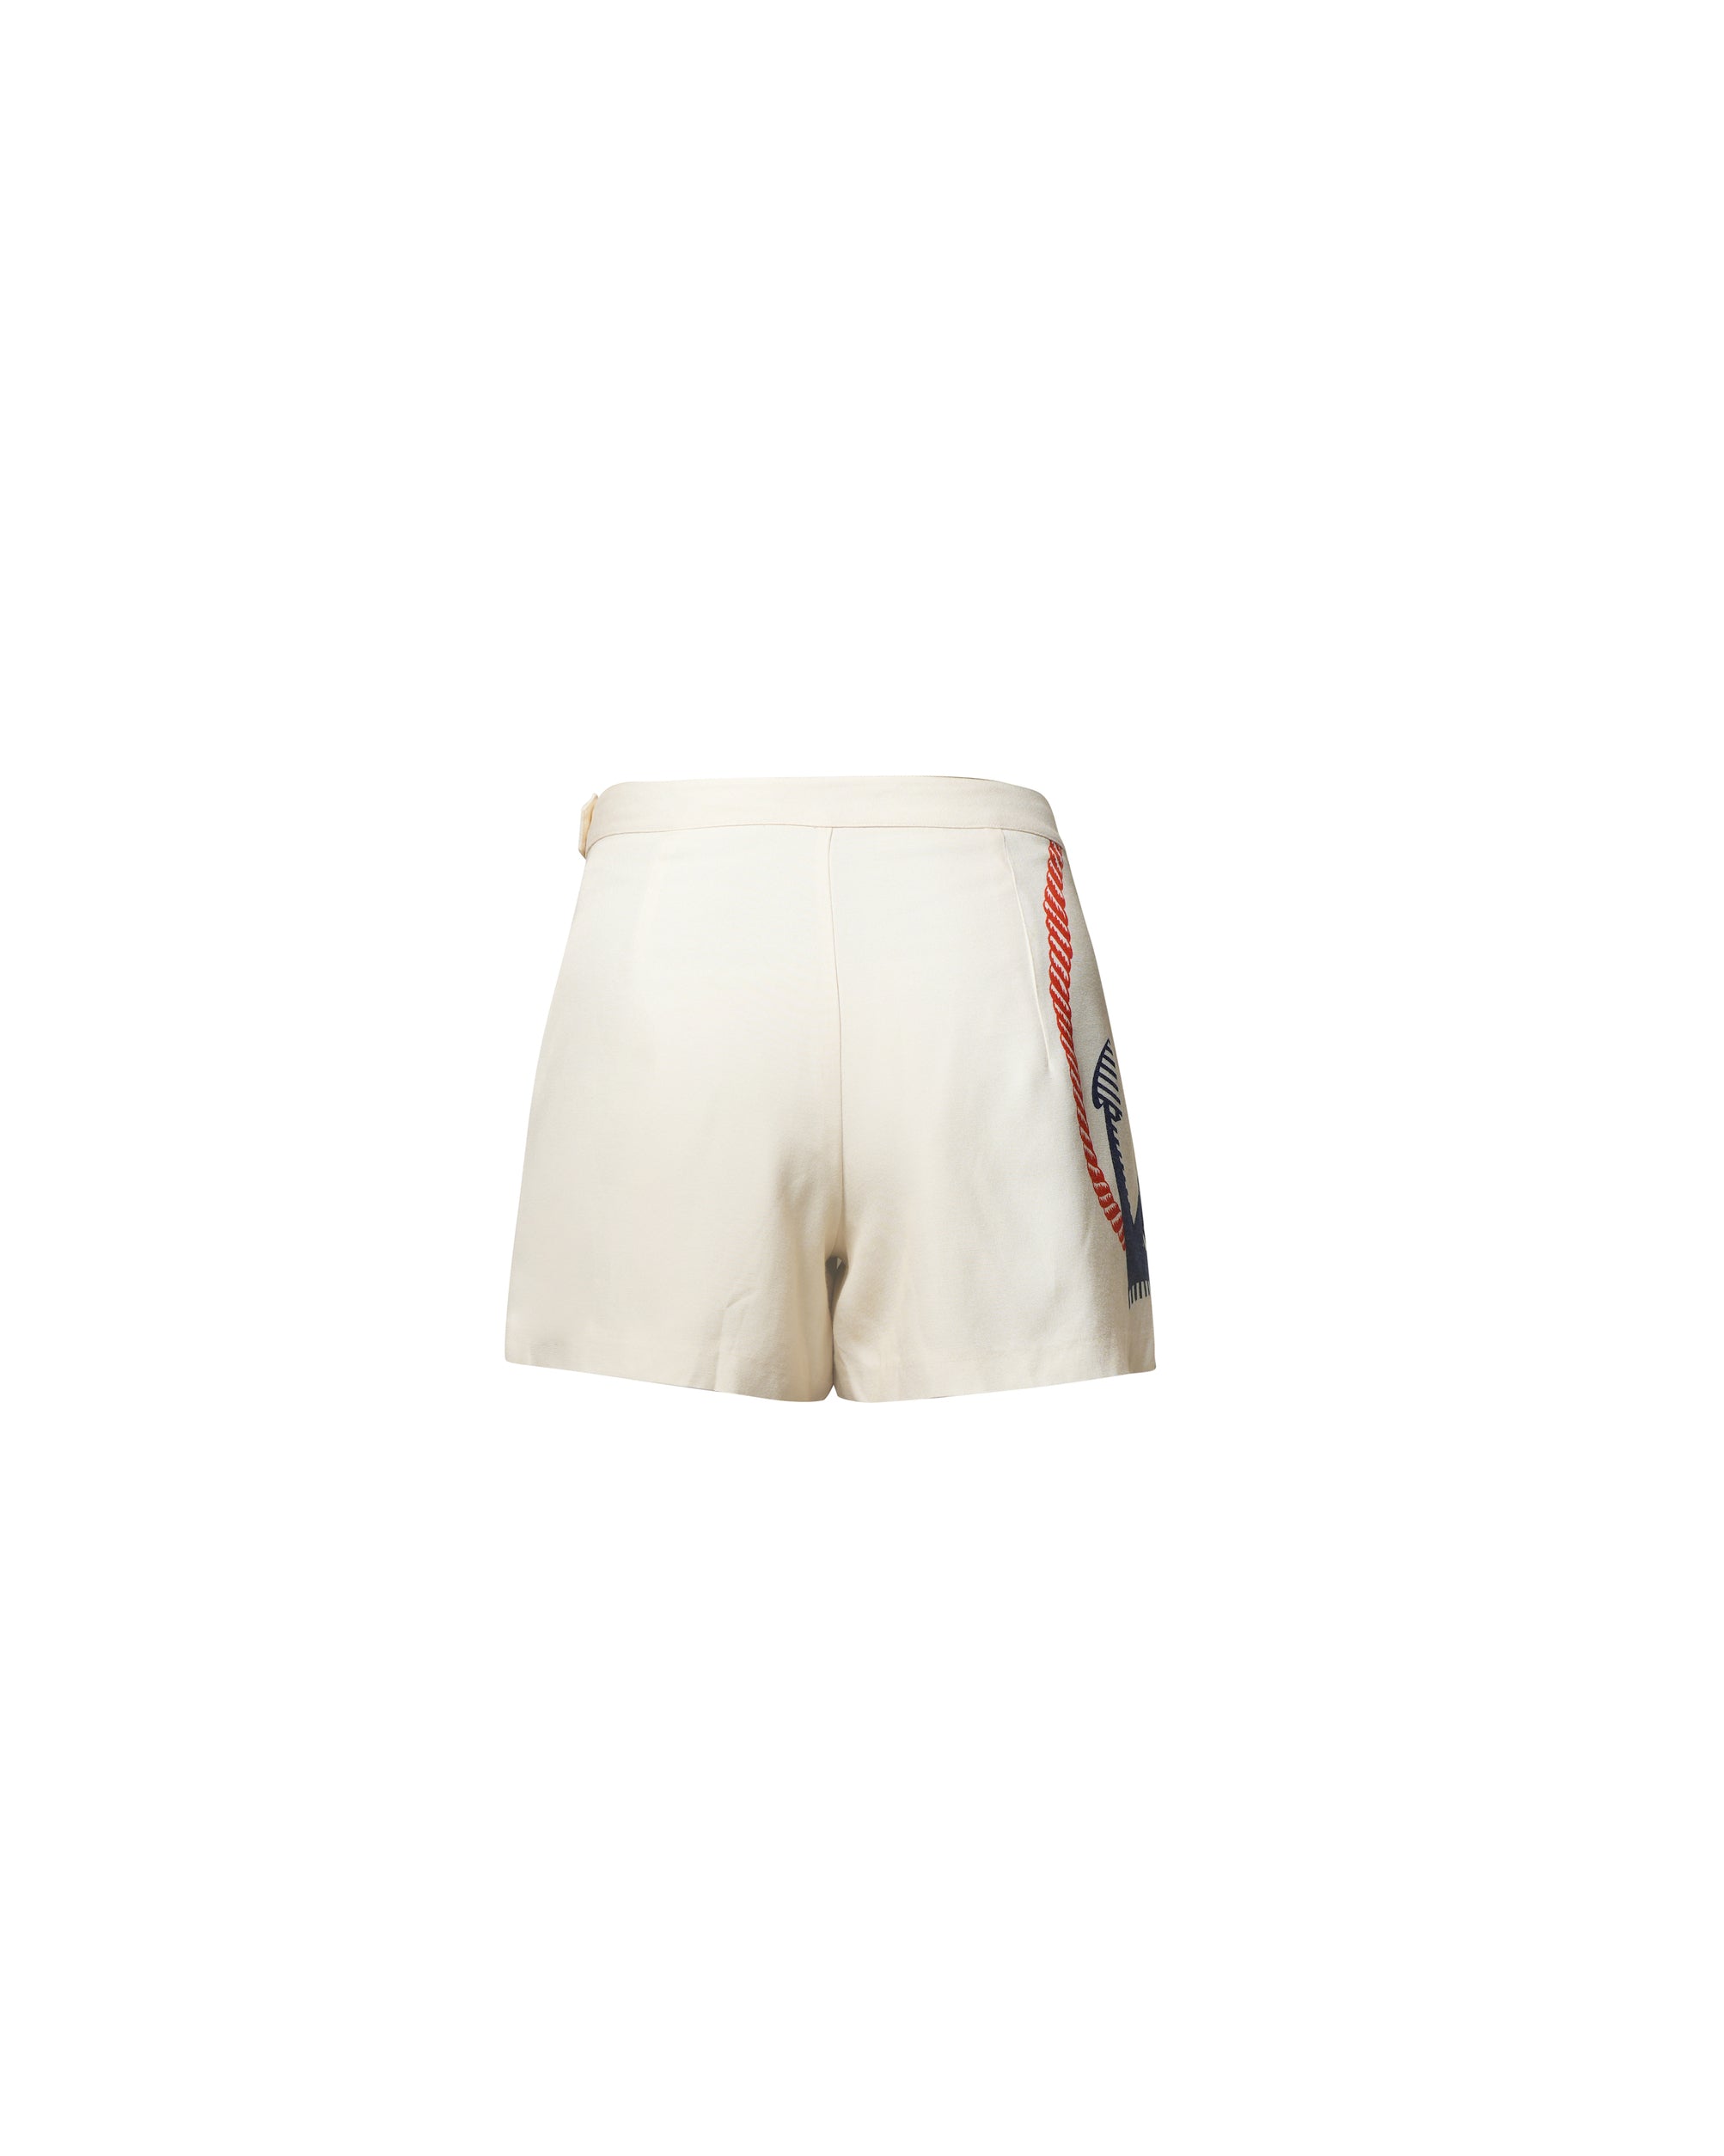 Ralph Lauren Off-White Printed Shorts